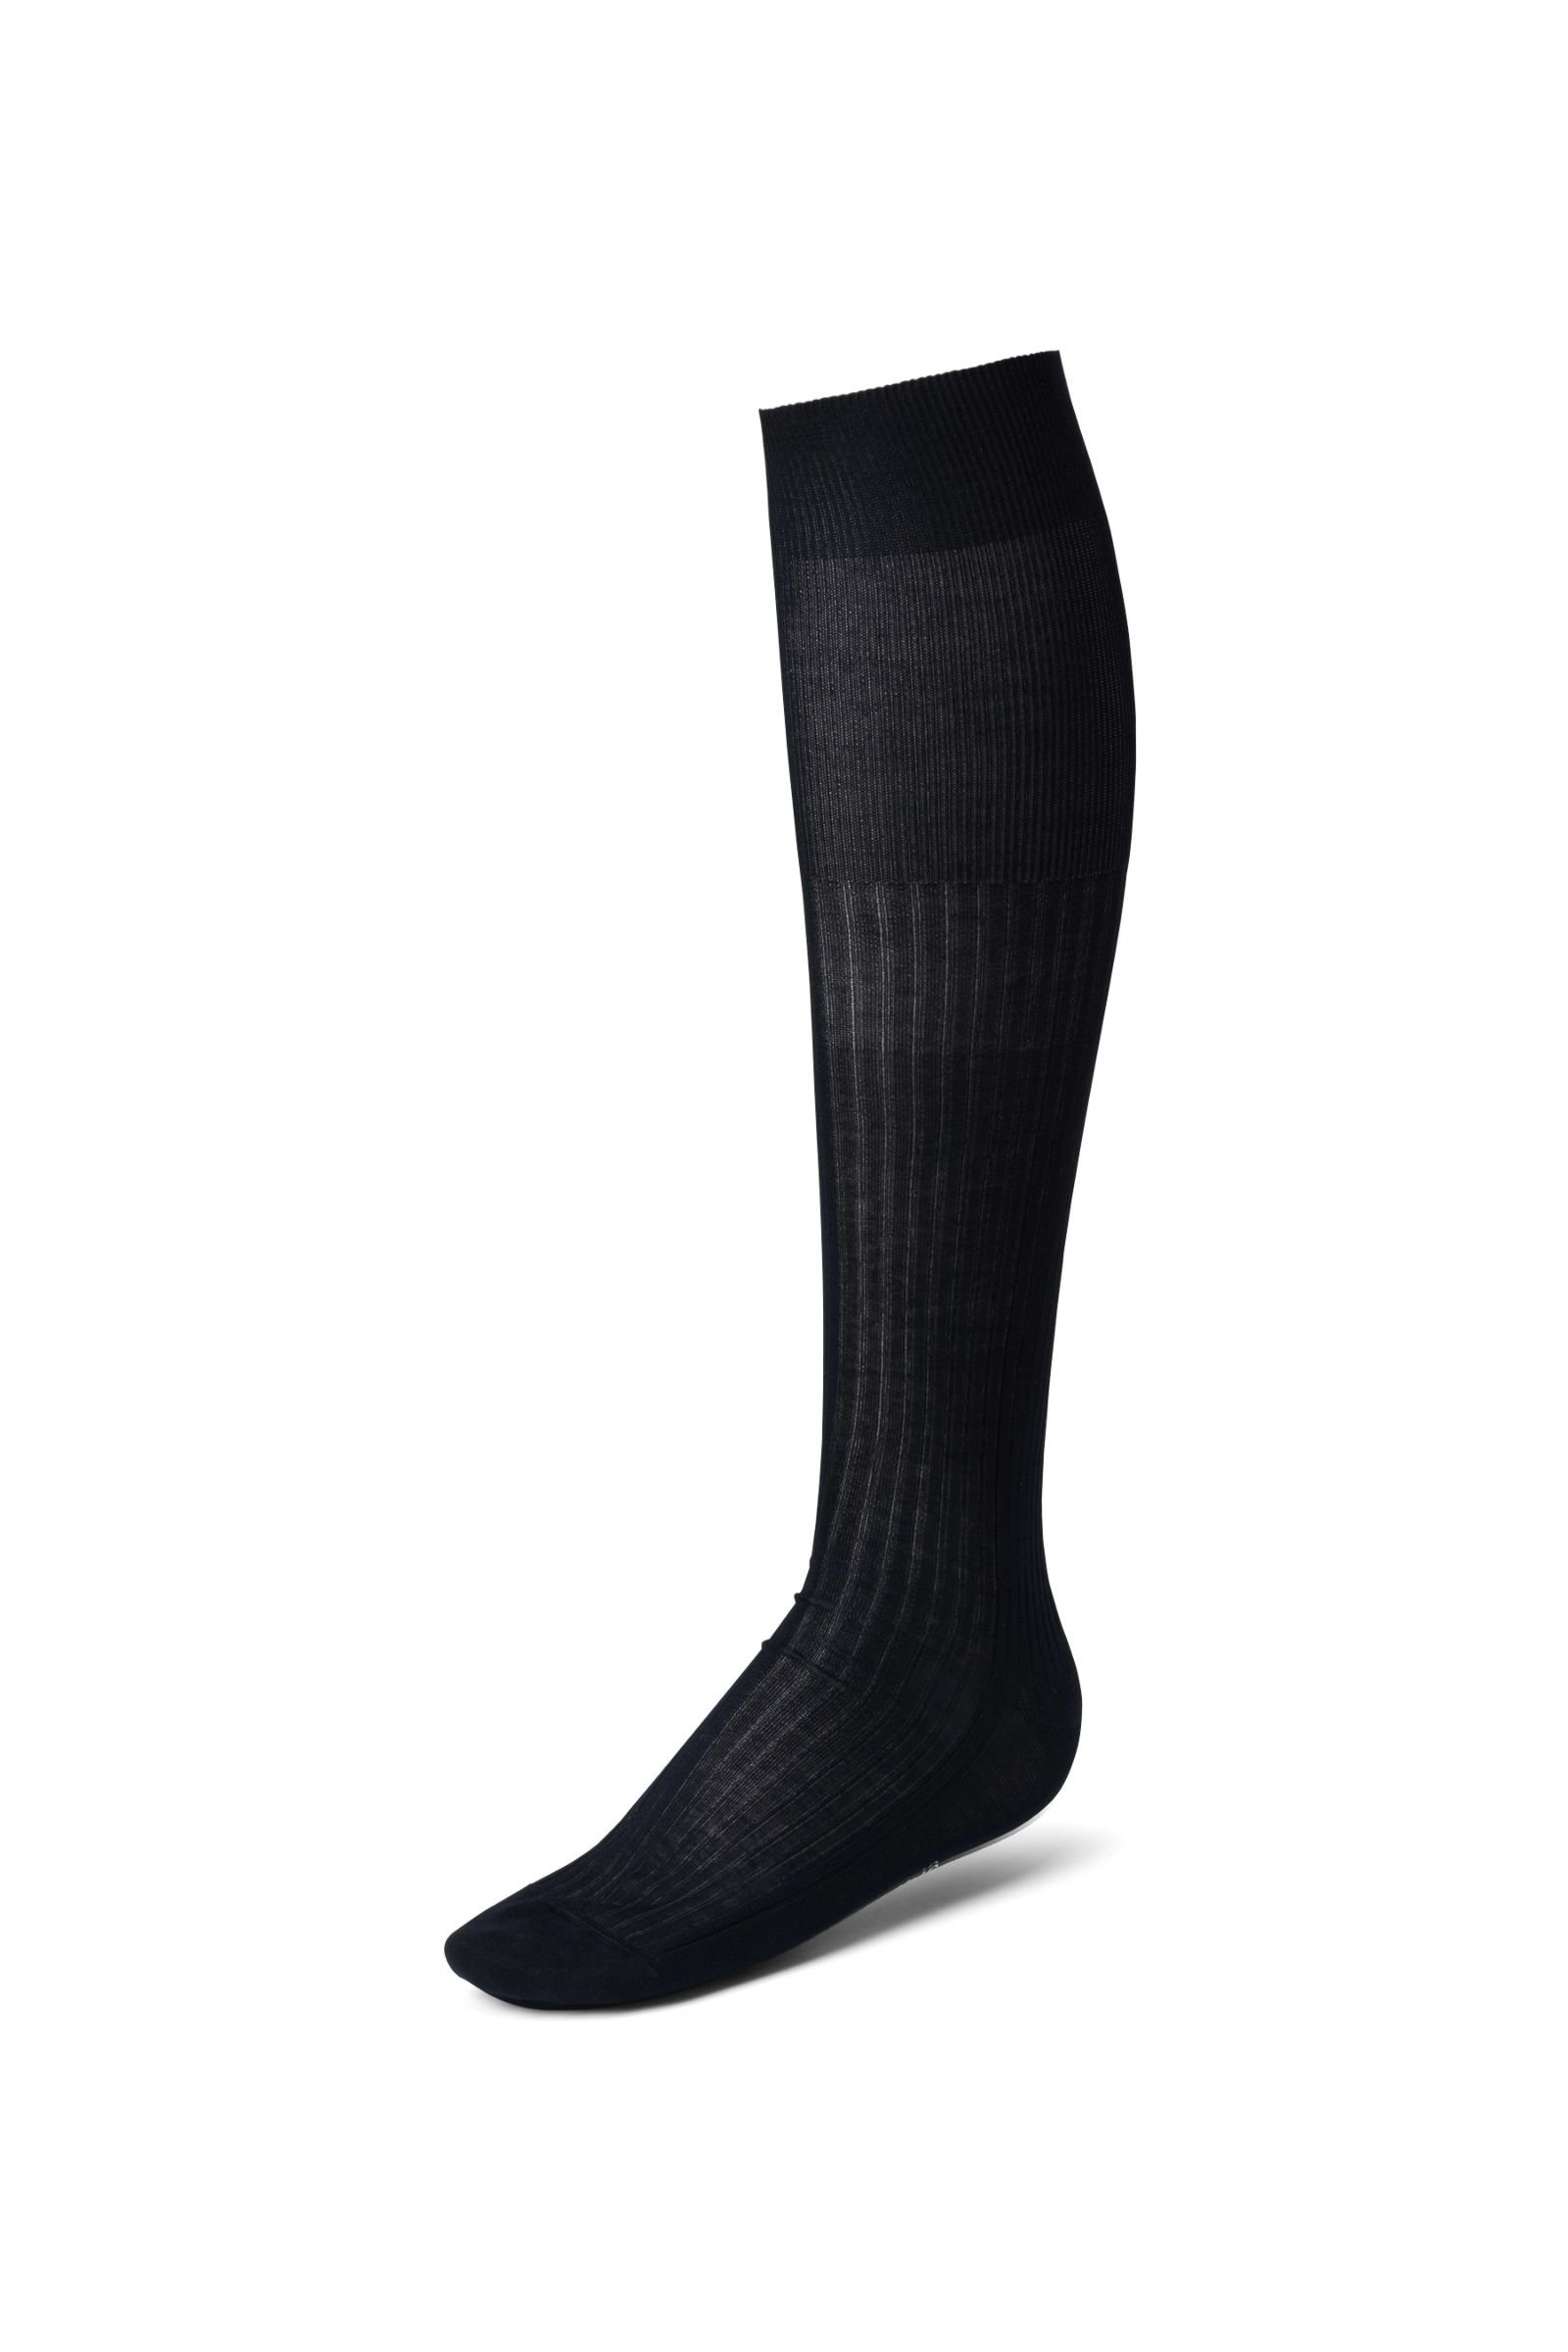 Cotton knee socks navy